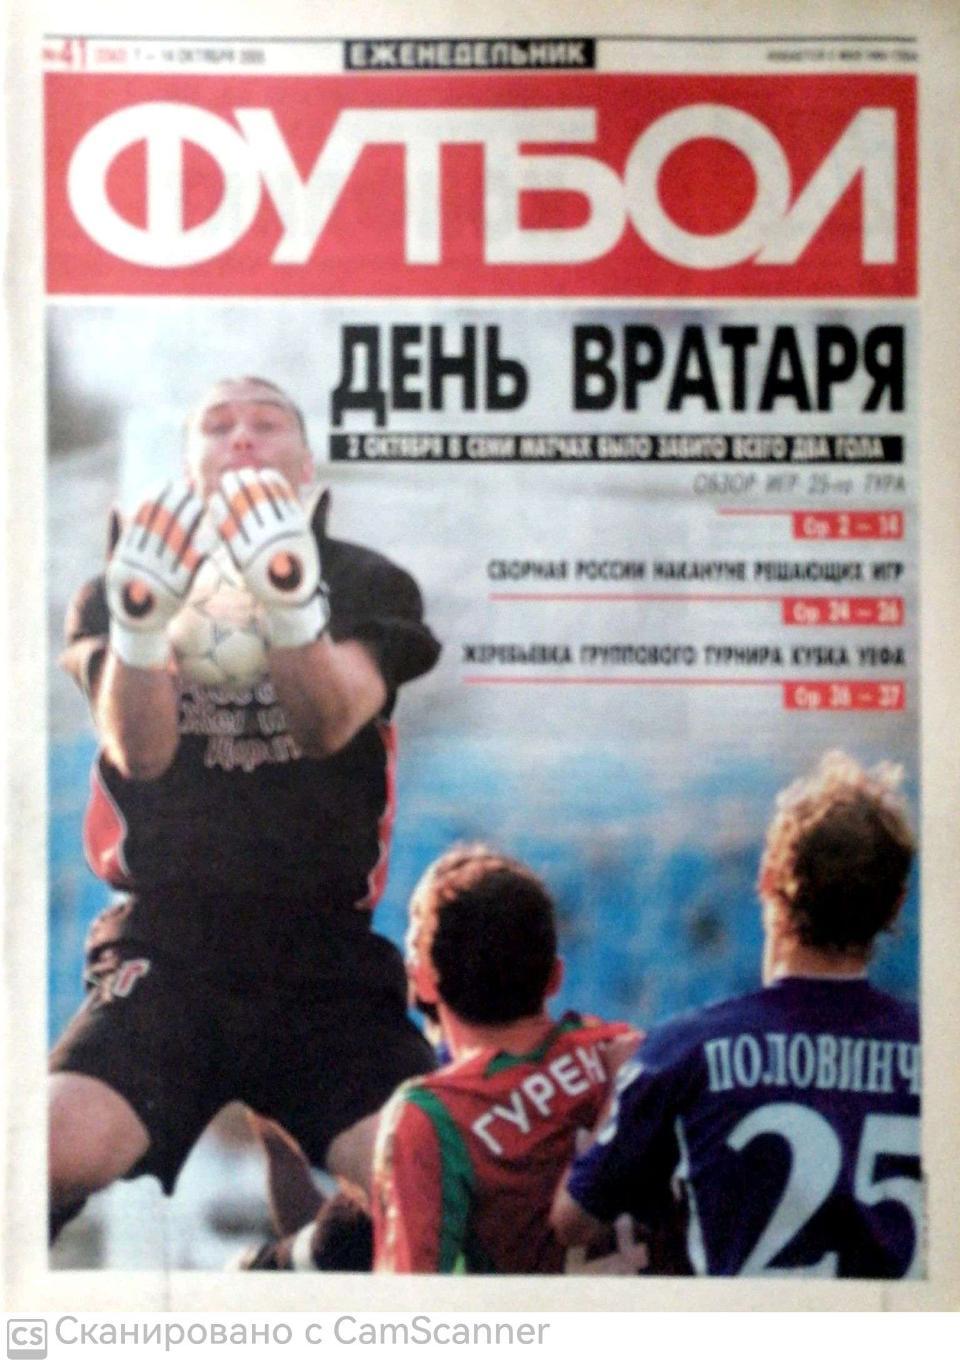 Еженедельник «Футбол» (Москва). 2005 год. №41